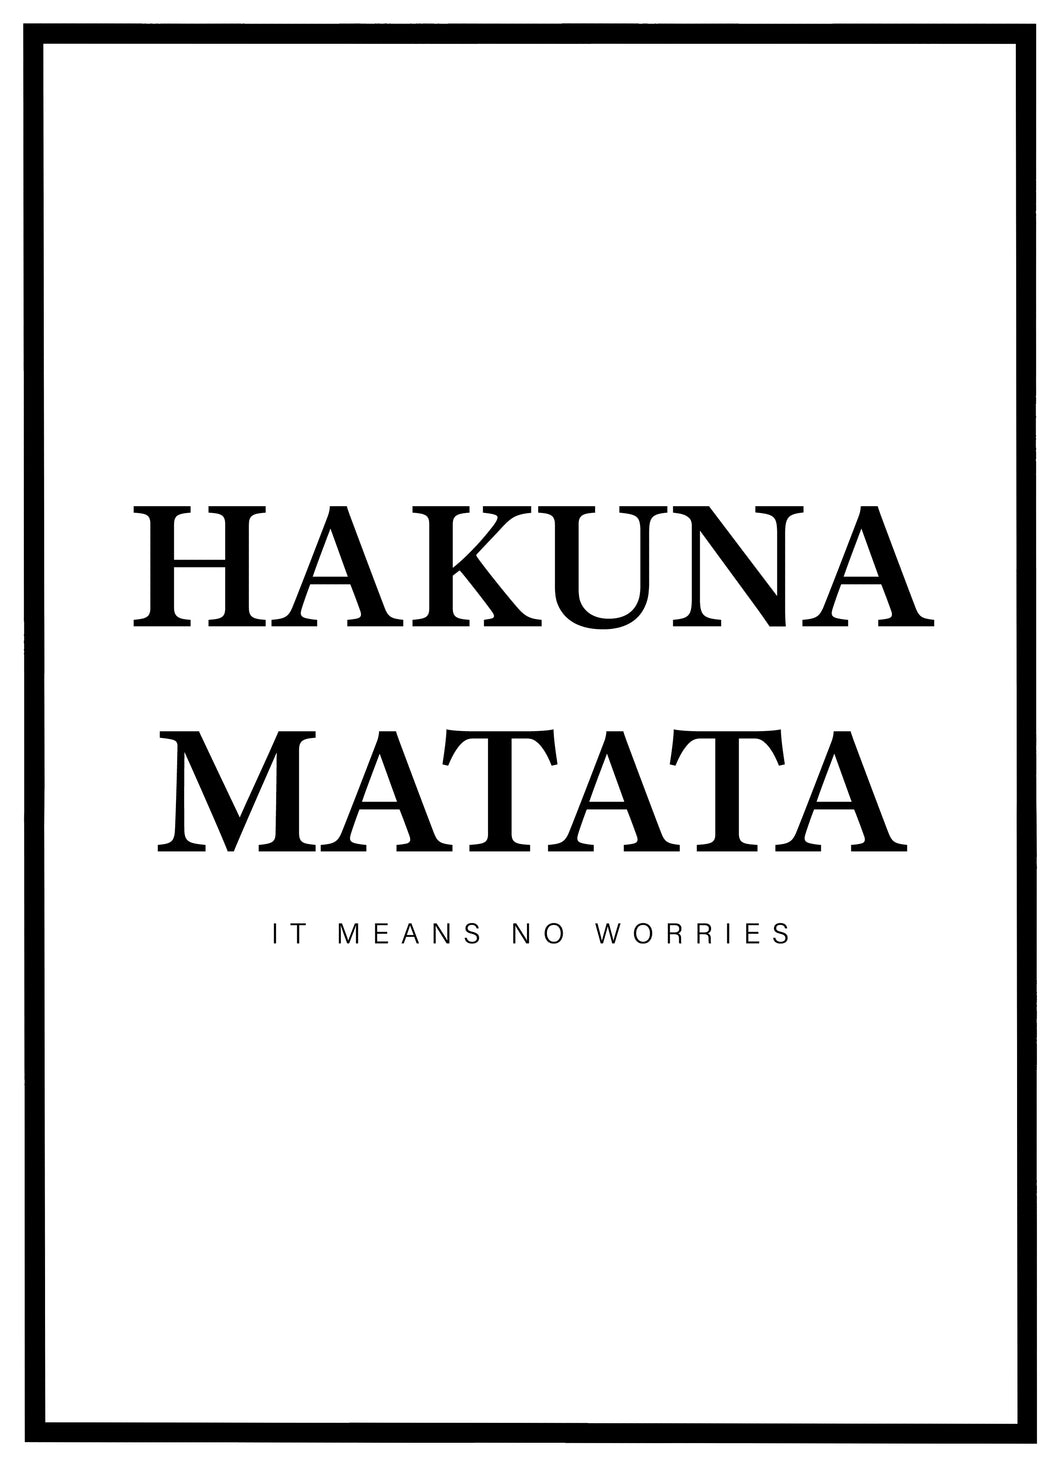 Hakuna Matata - Plakat